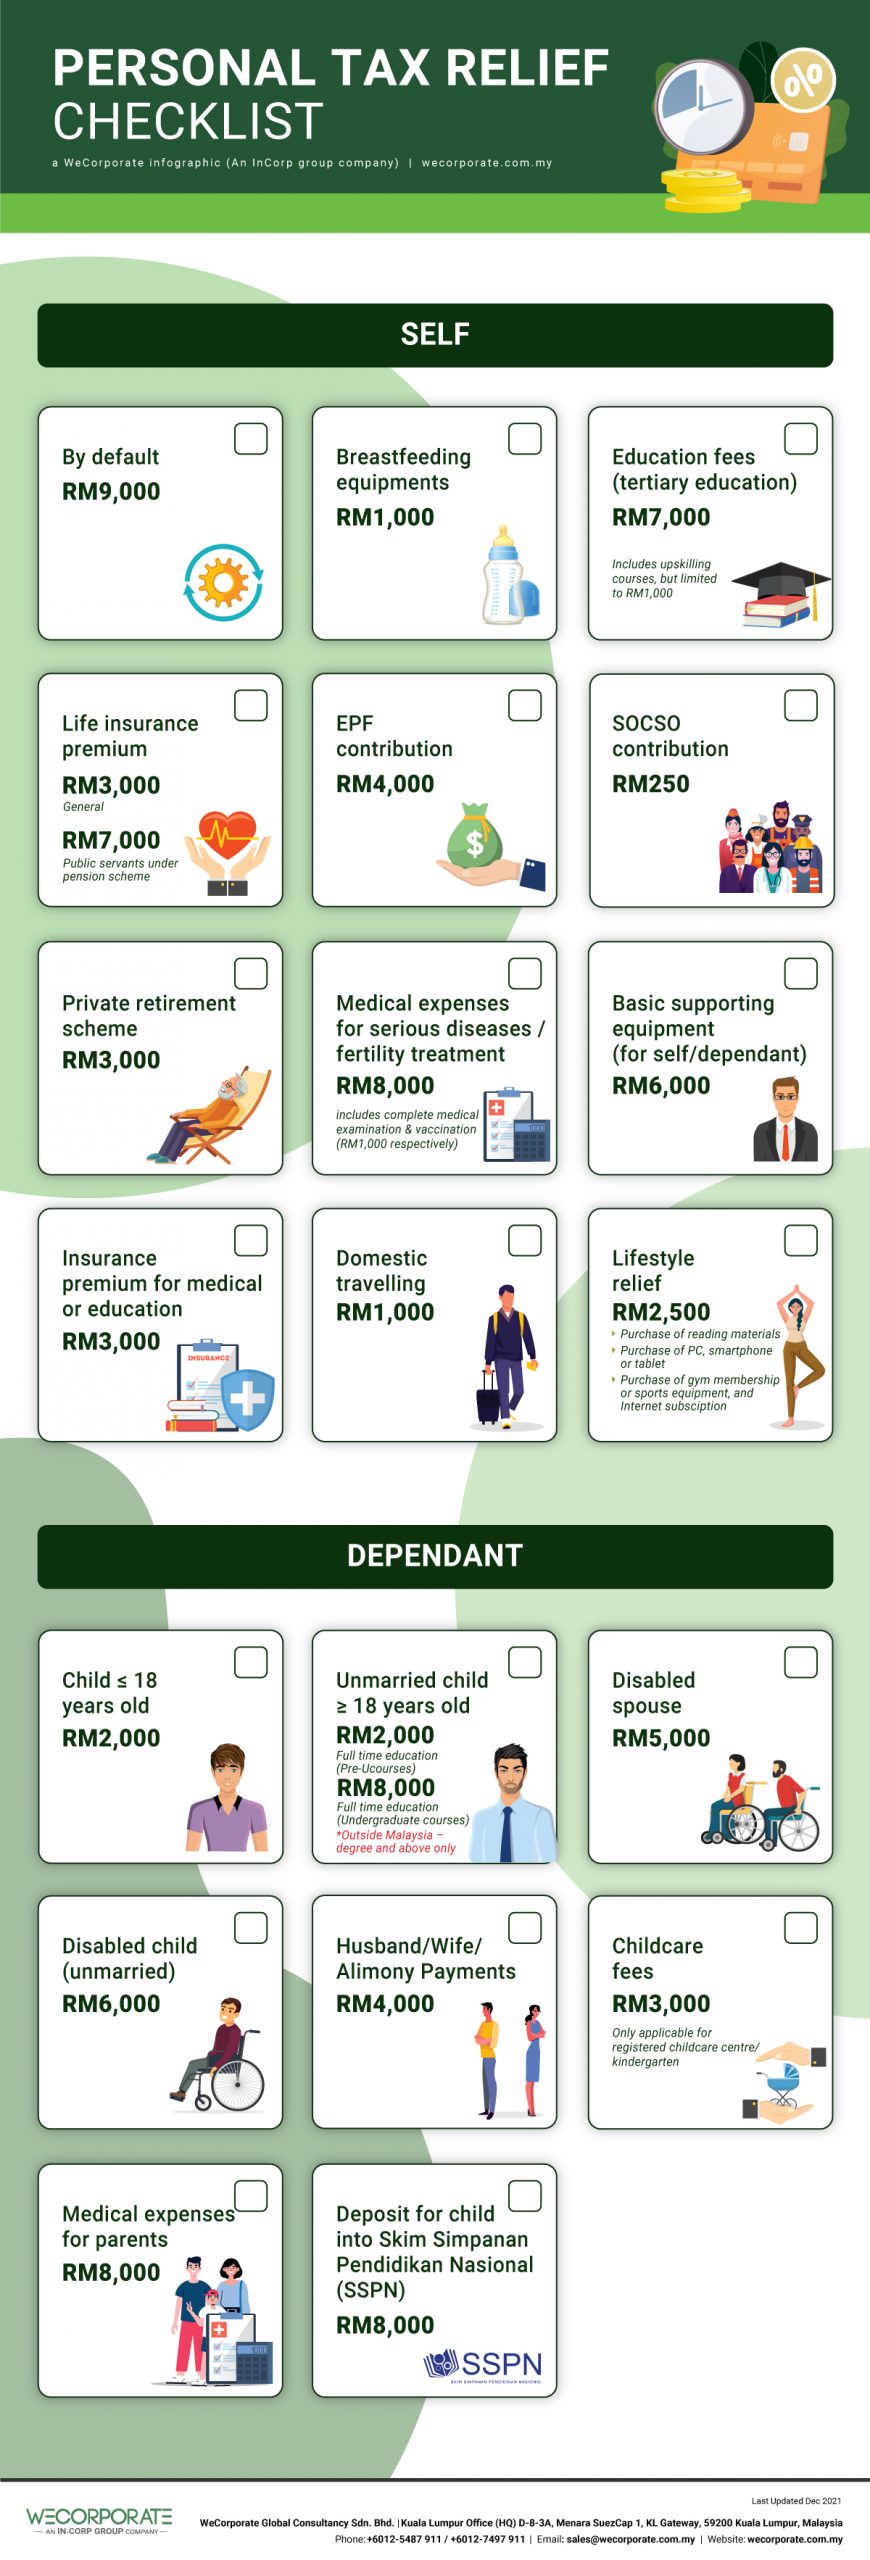 Personal Tax Relief in Malaysia Checklist